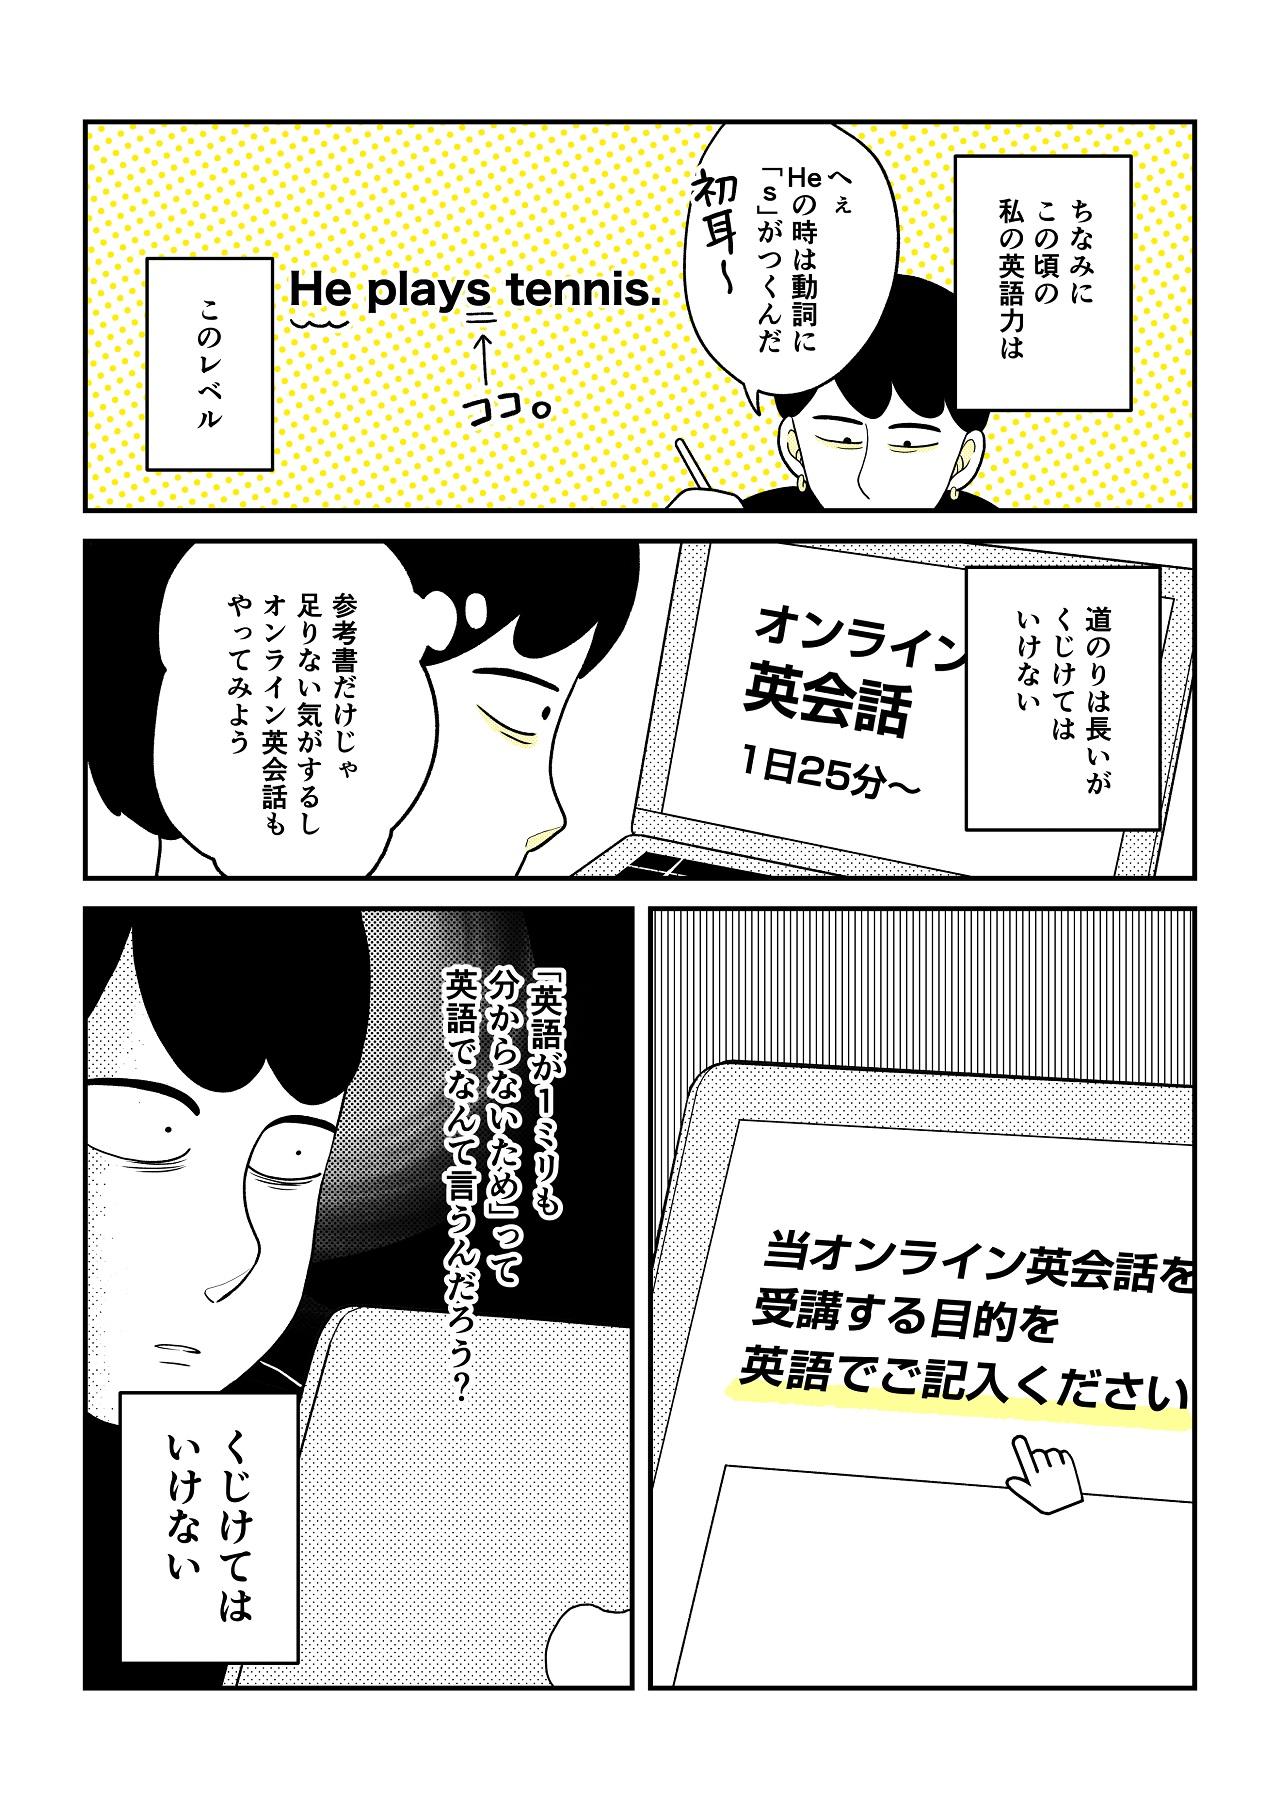 https://www.ryugaku.co.jp/column/images/04_05_1280.jpg